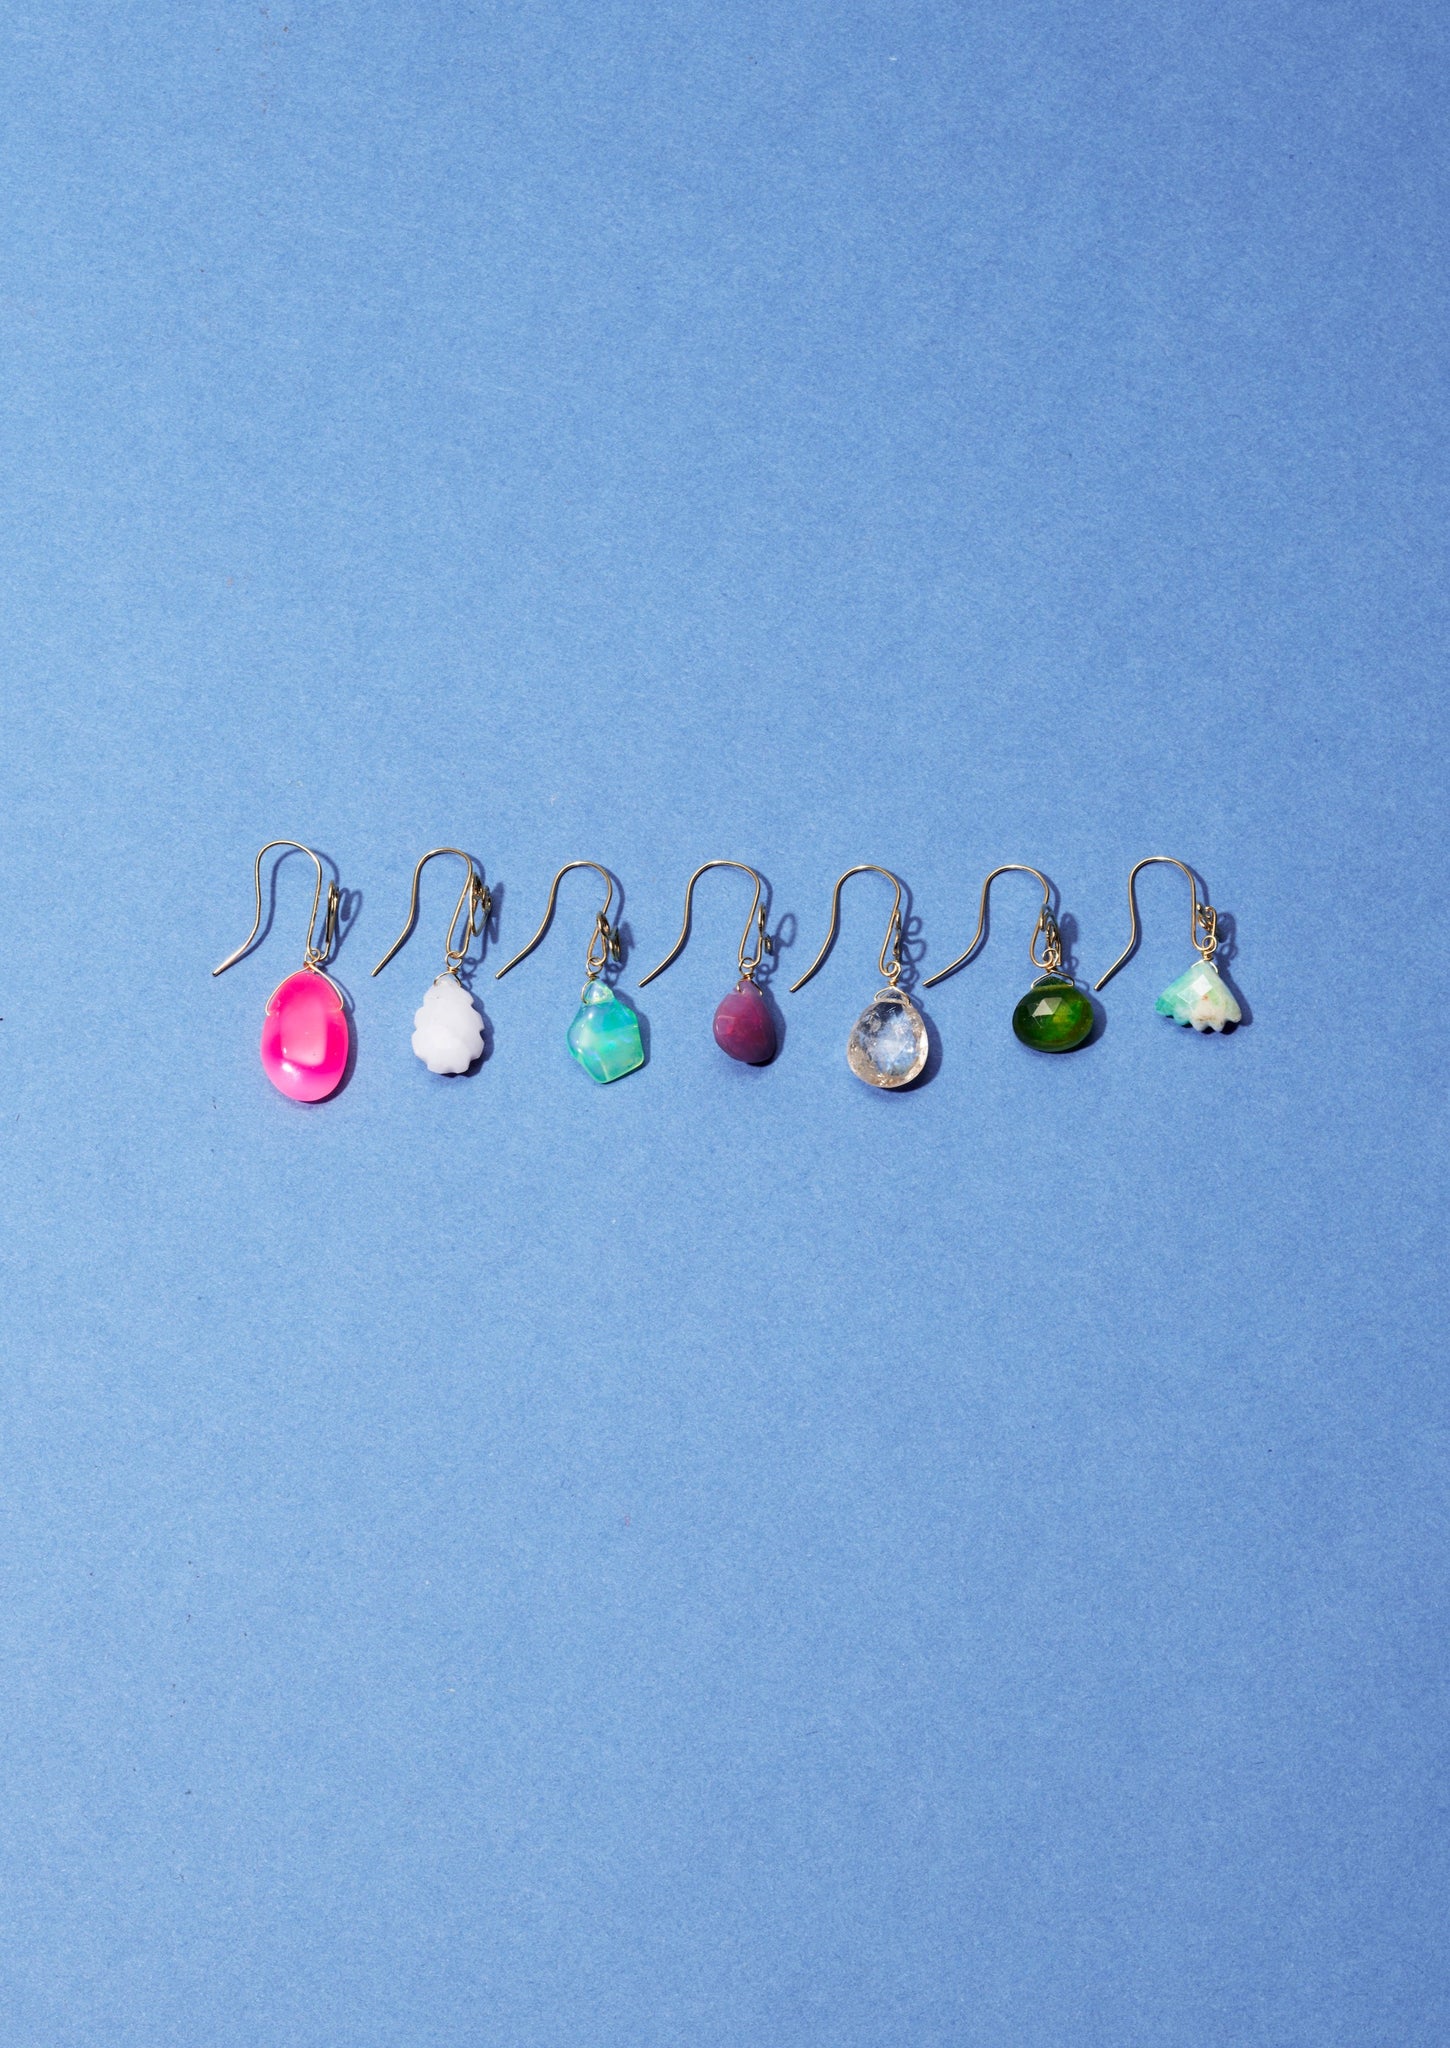 Unloved Gems earrings